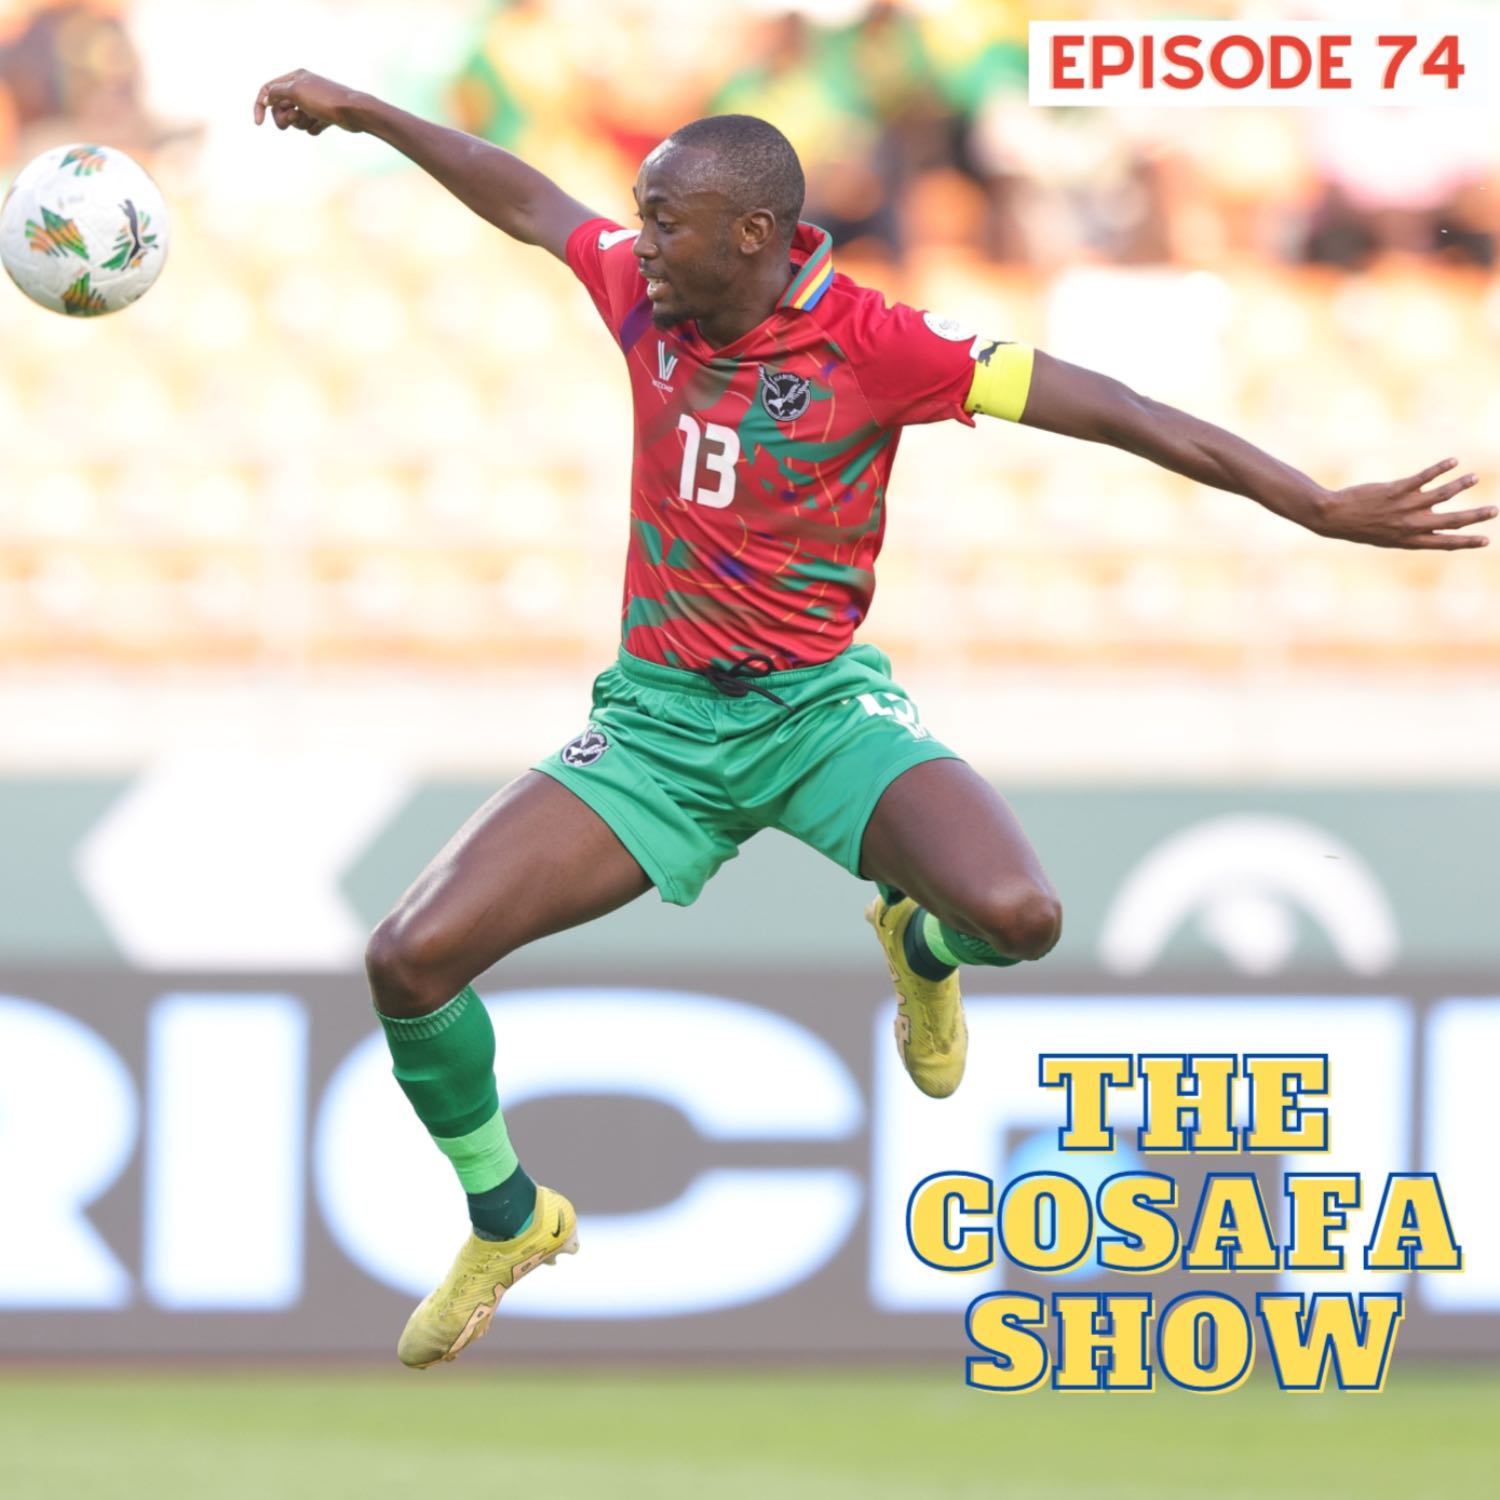 COSAFA rise!